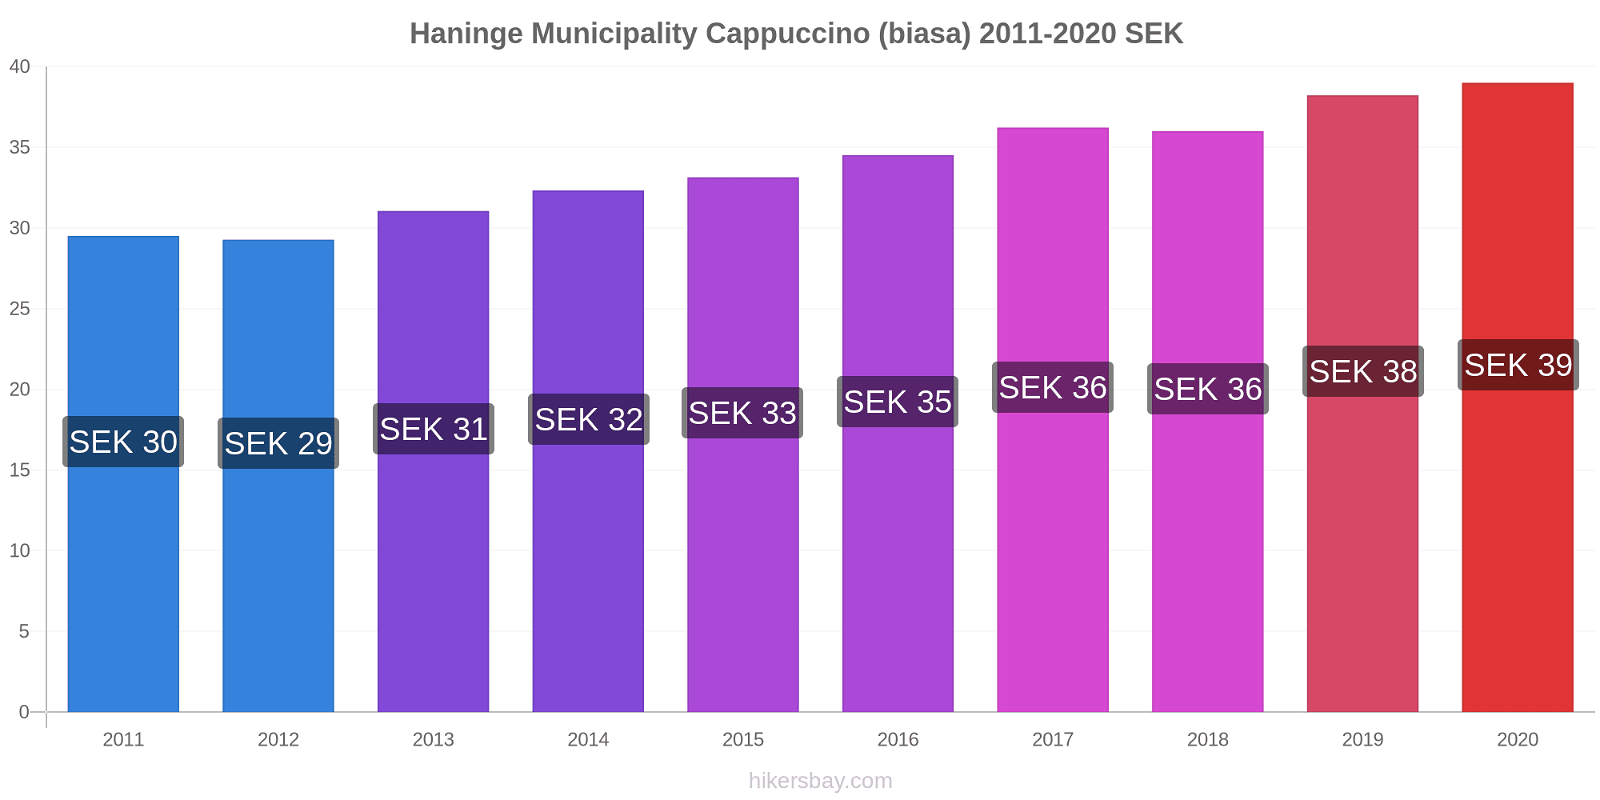 Haninge Municipality perubahan harga Cappuccino (biasa) hikersbay.com